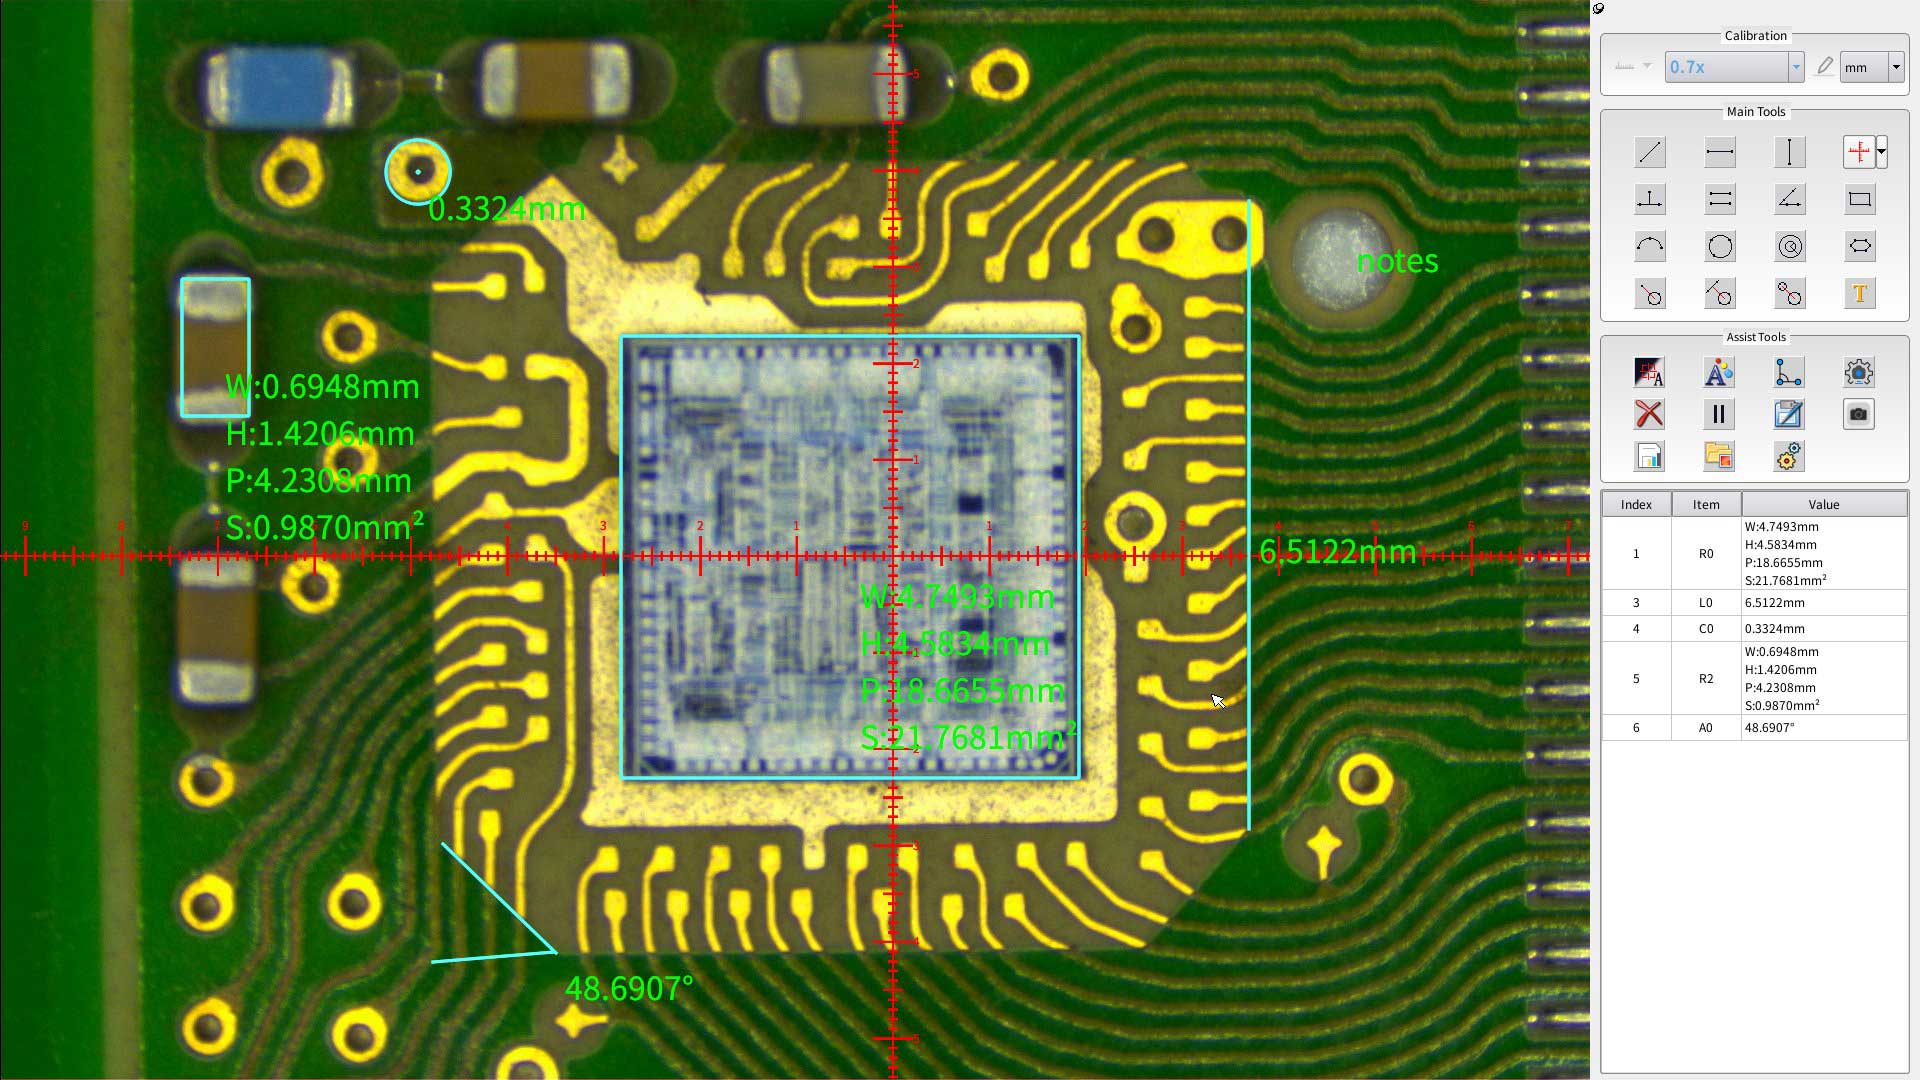 mmbtz45x-hd-digital-measuring-microscope-screen-green-circuit-board